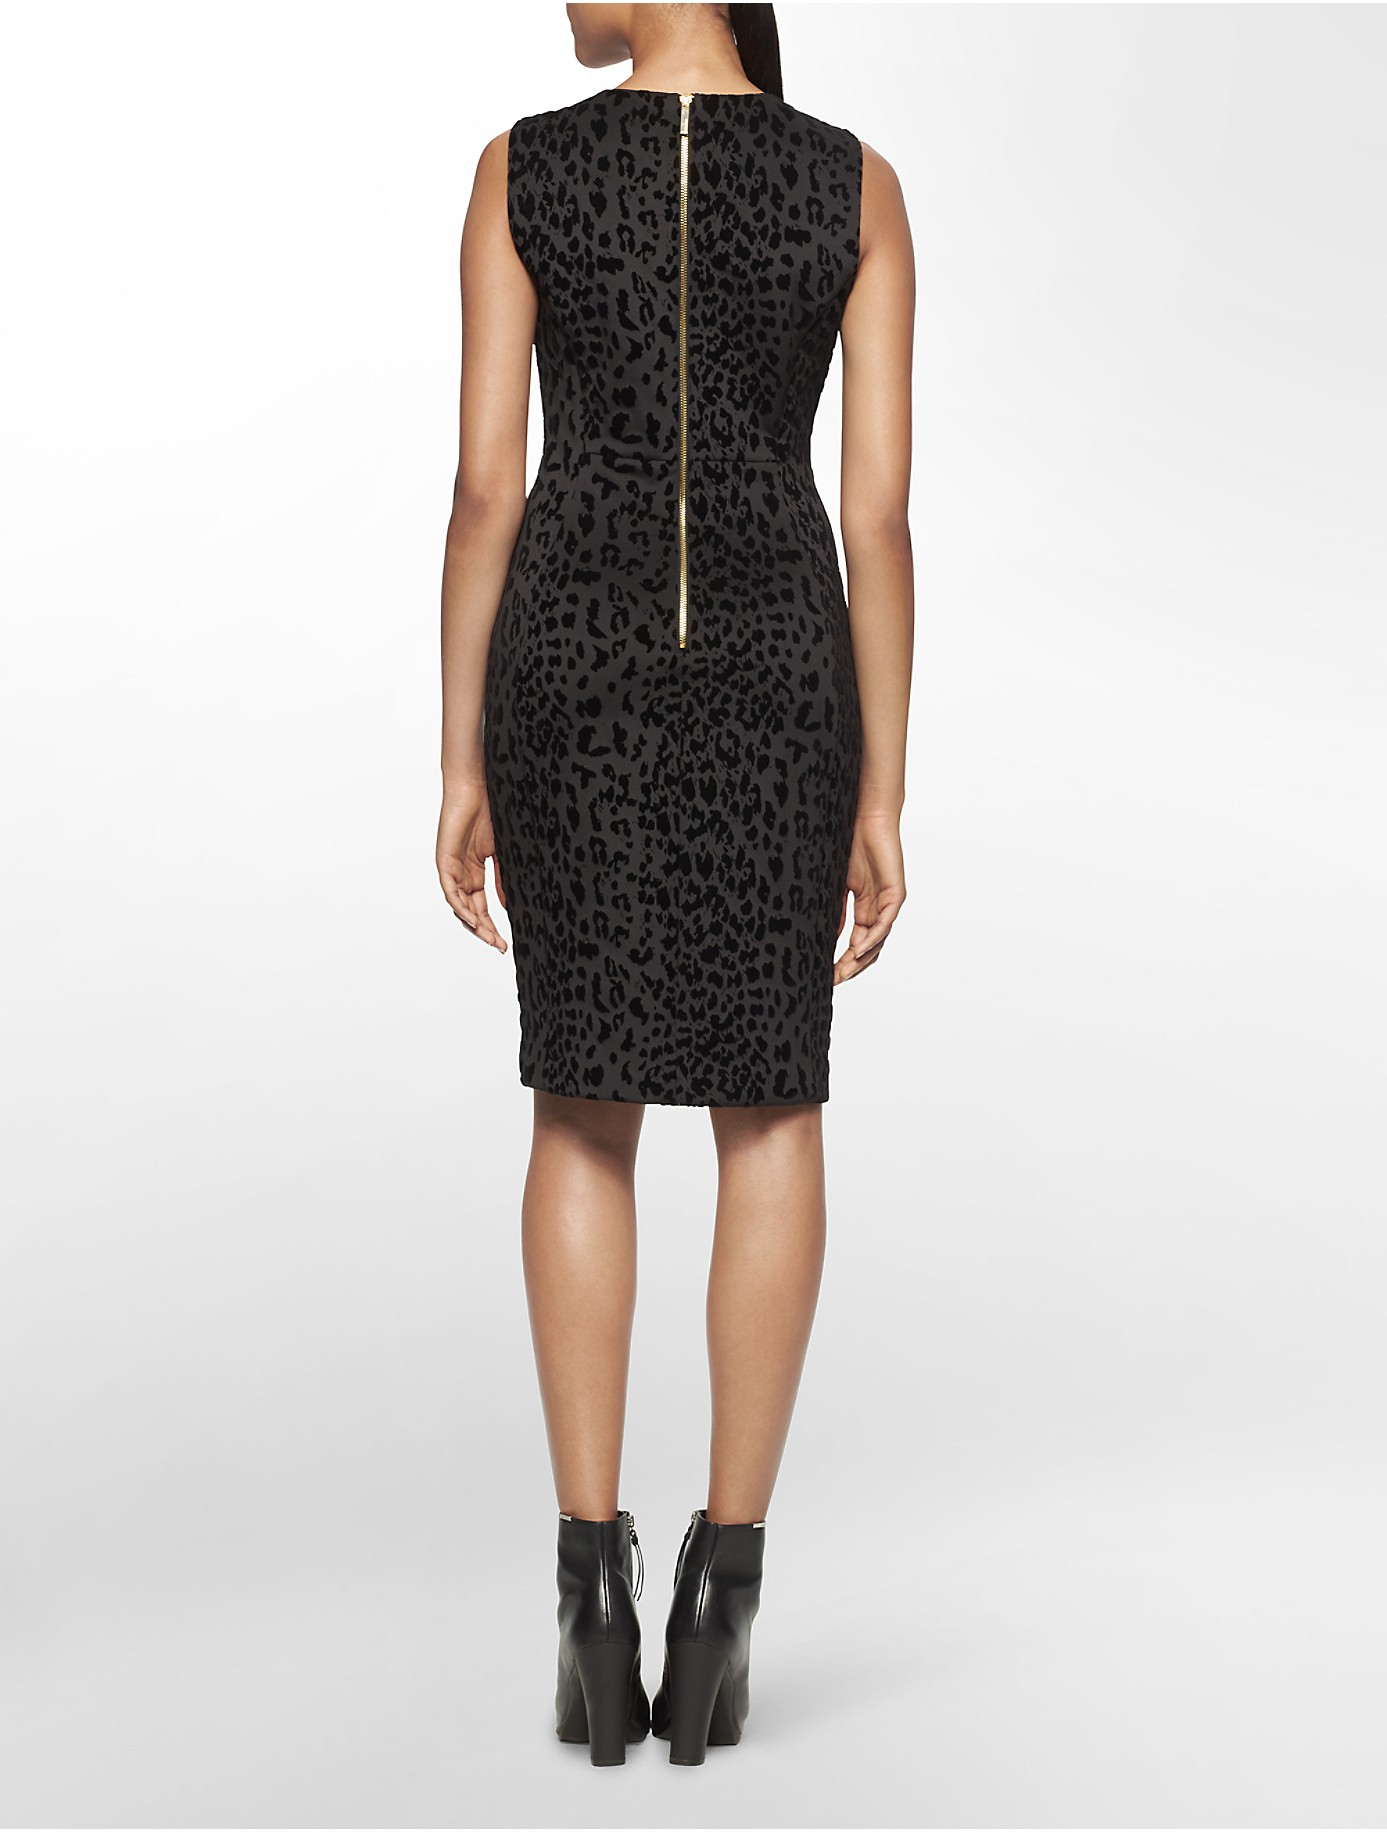 Calvin Klein Textured Leopard Print Sleeveless Sheath Dress in Black | Lyst